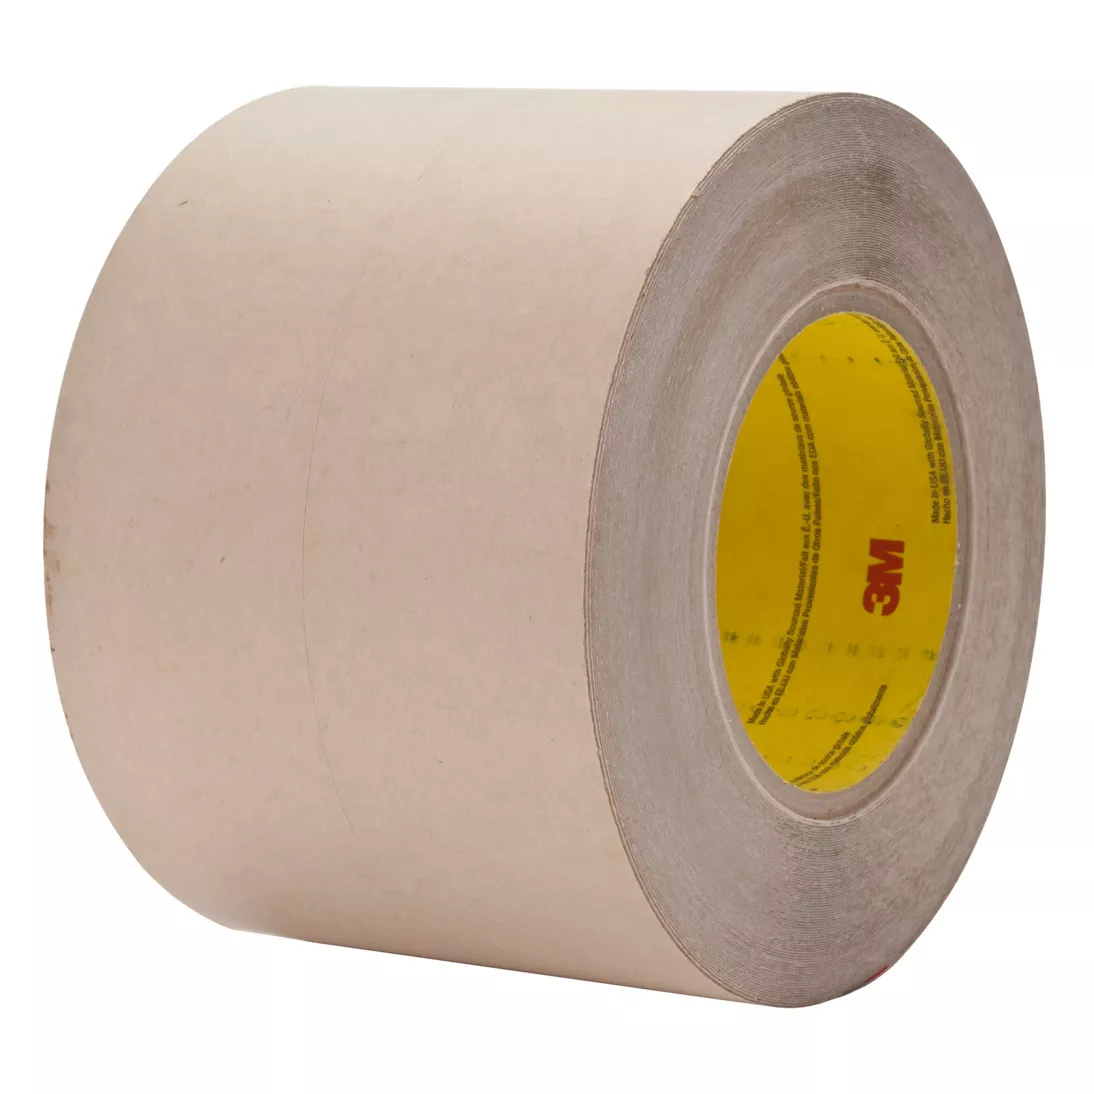 3M™ Sealing Tape 8777, Tan, 6 in x 75 ft, 8 rolls per case, Slit Liner
(4-2 Slit)